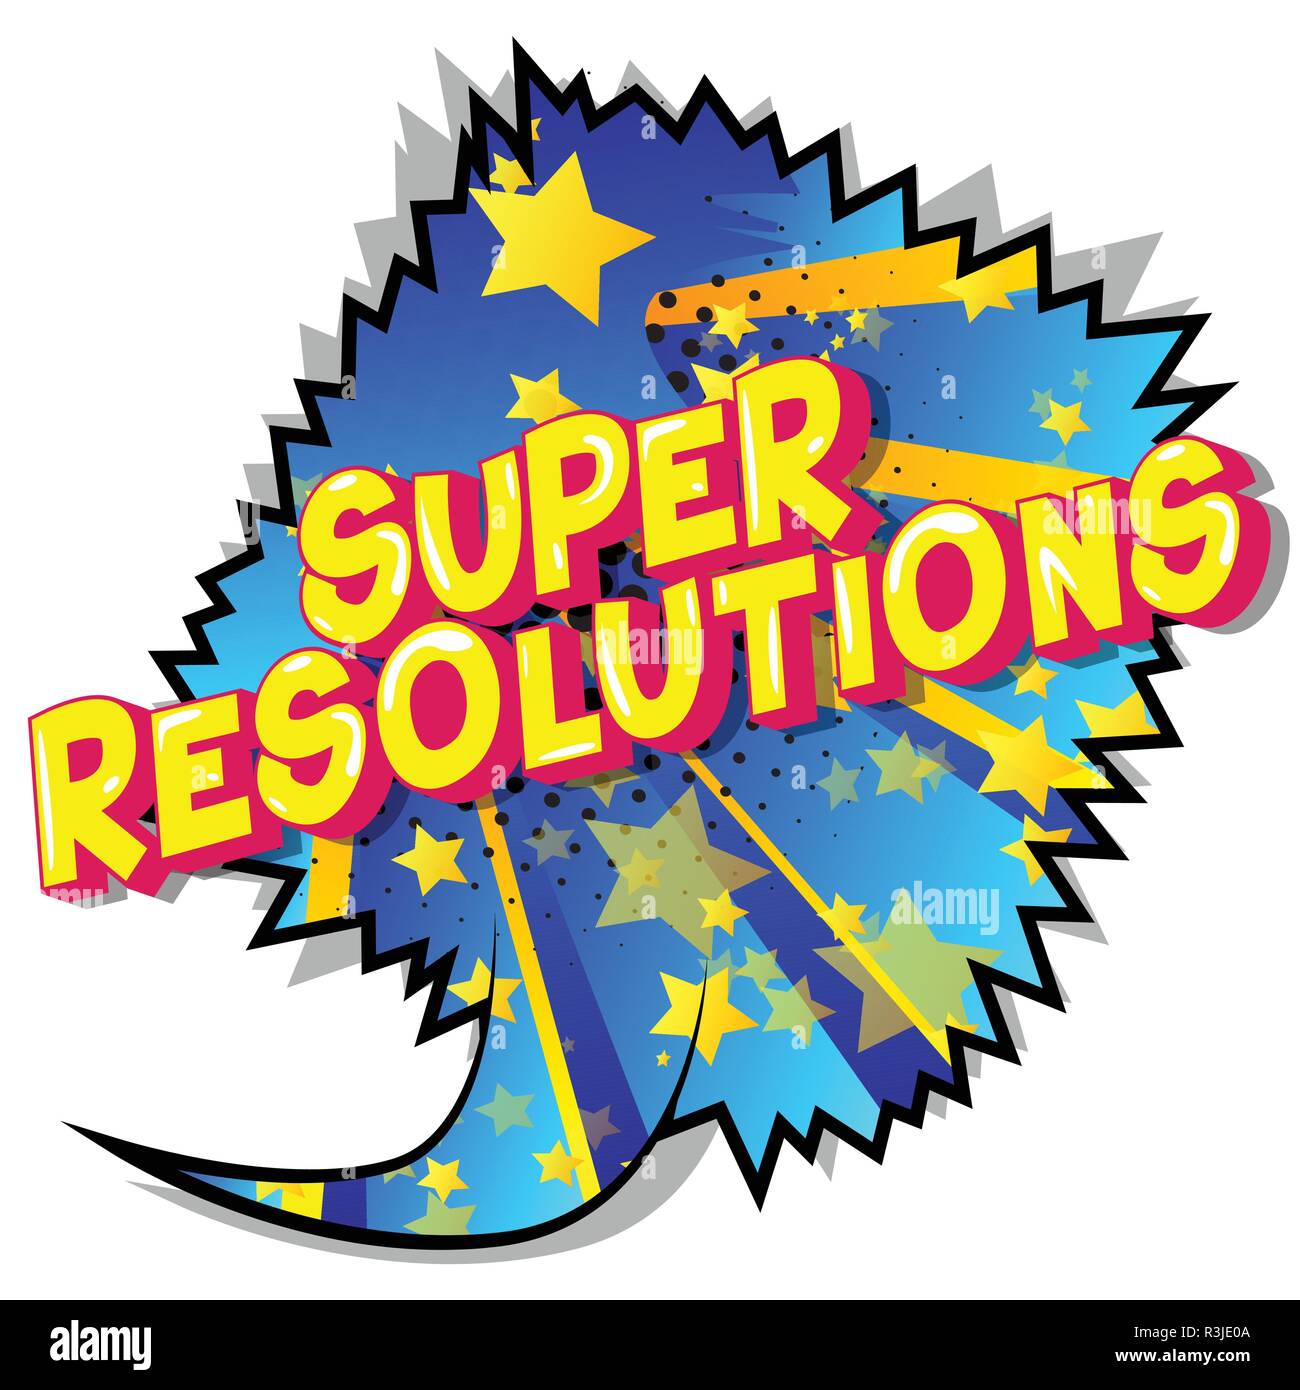 Super Resolution-Vector illustrierte Comic Stil Phrase auf abstrakten Hintergrund. Stock Vektor